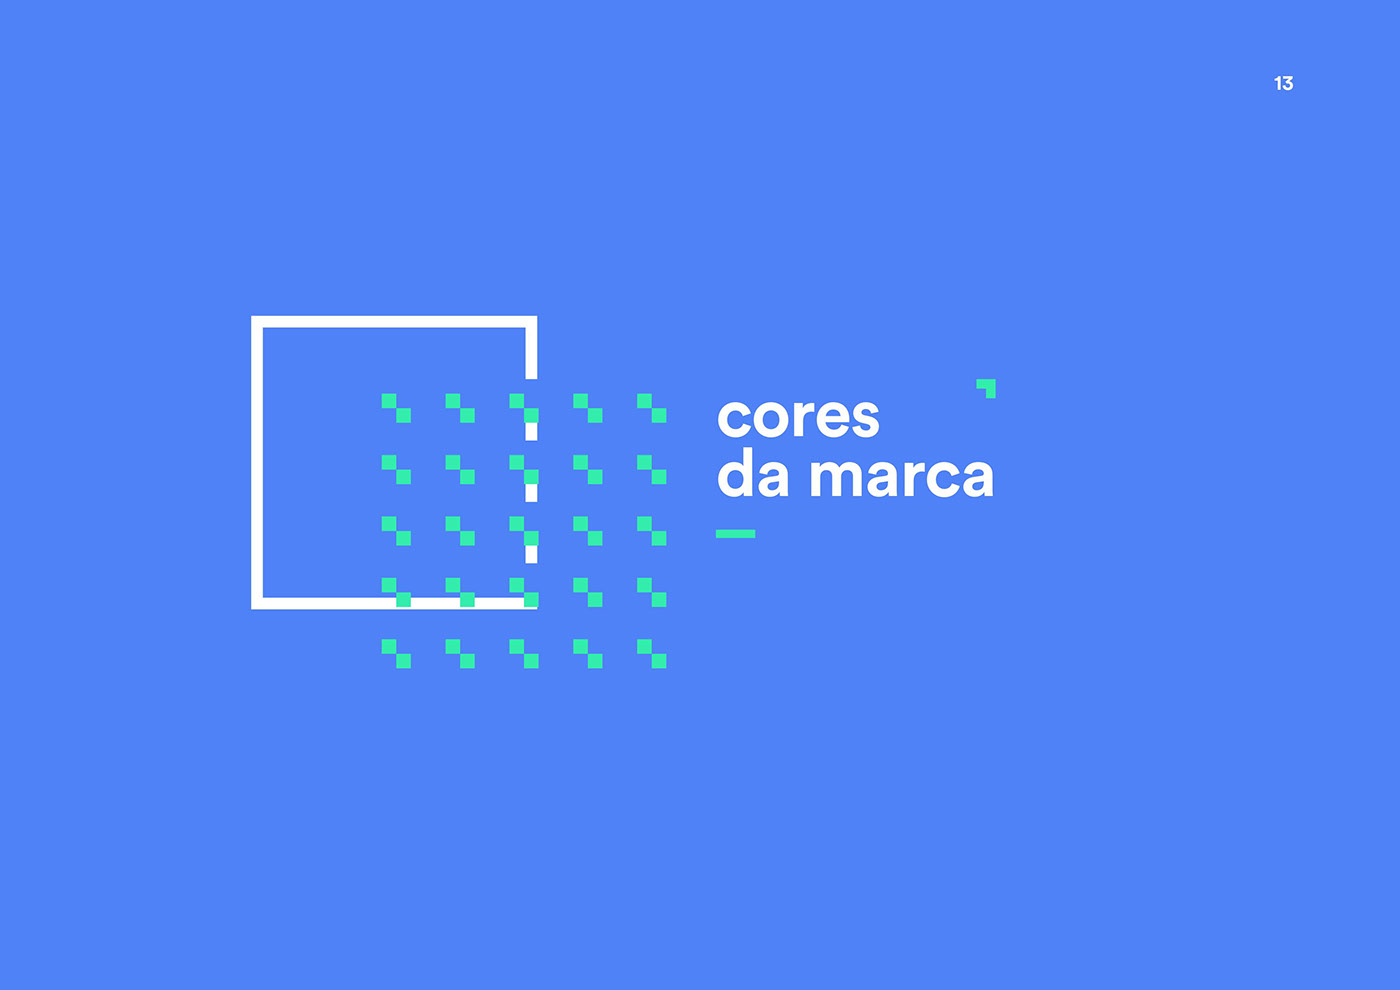 Manual de Marca brand book identidade visual logo